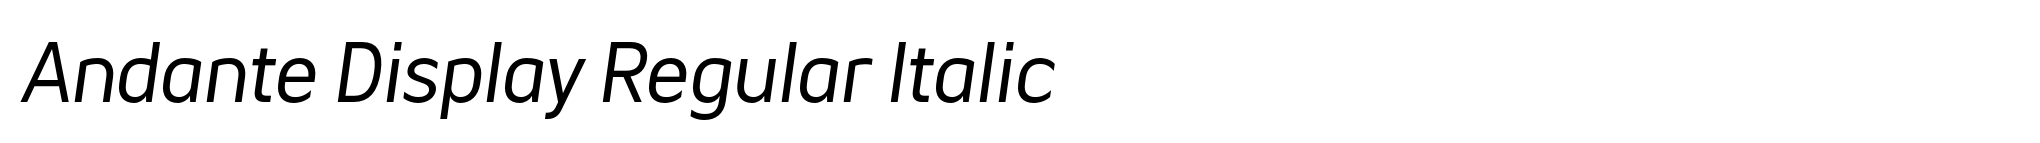 Andante Display Regular Italic image